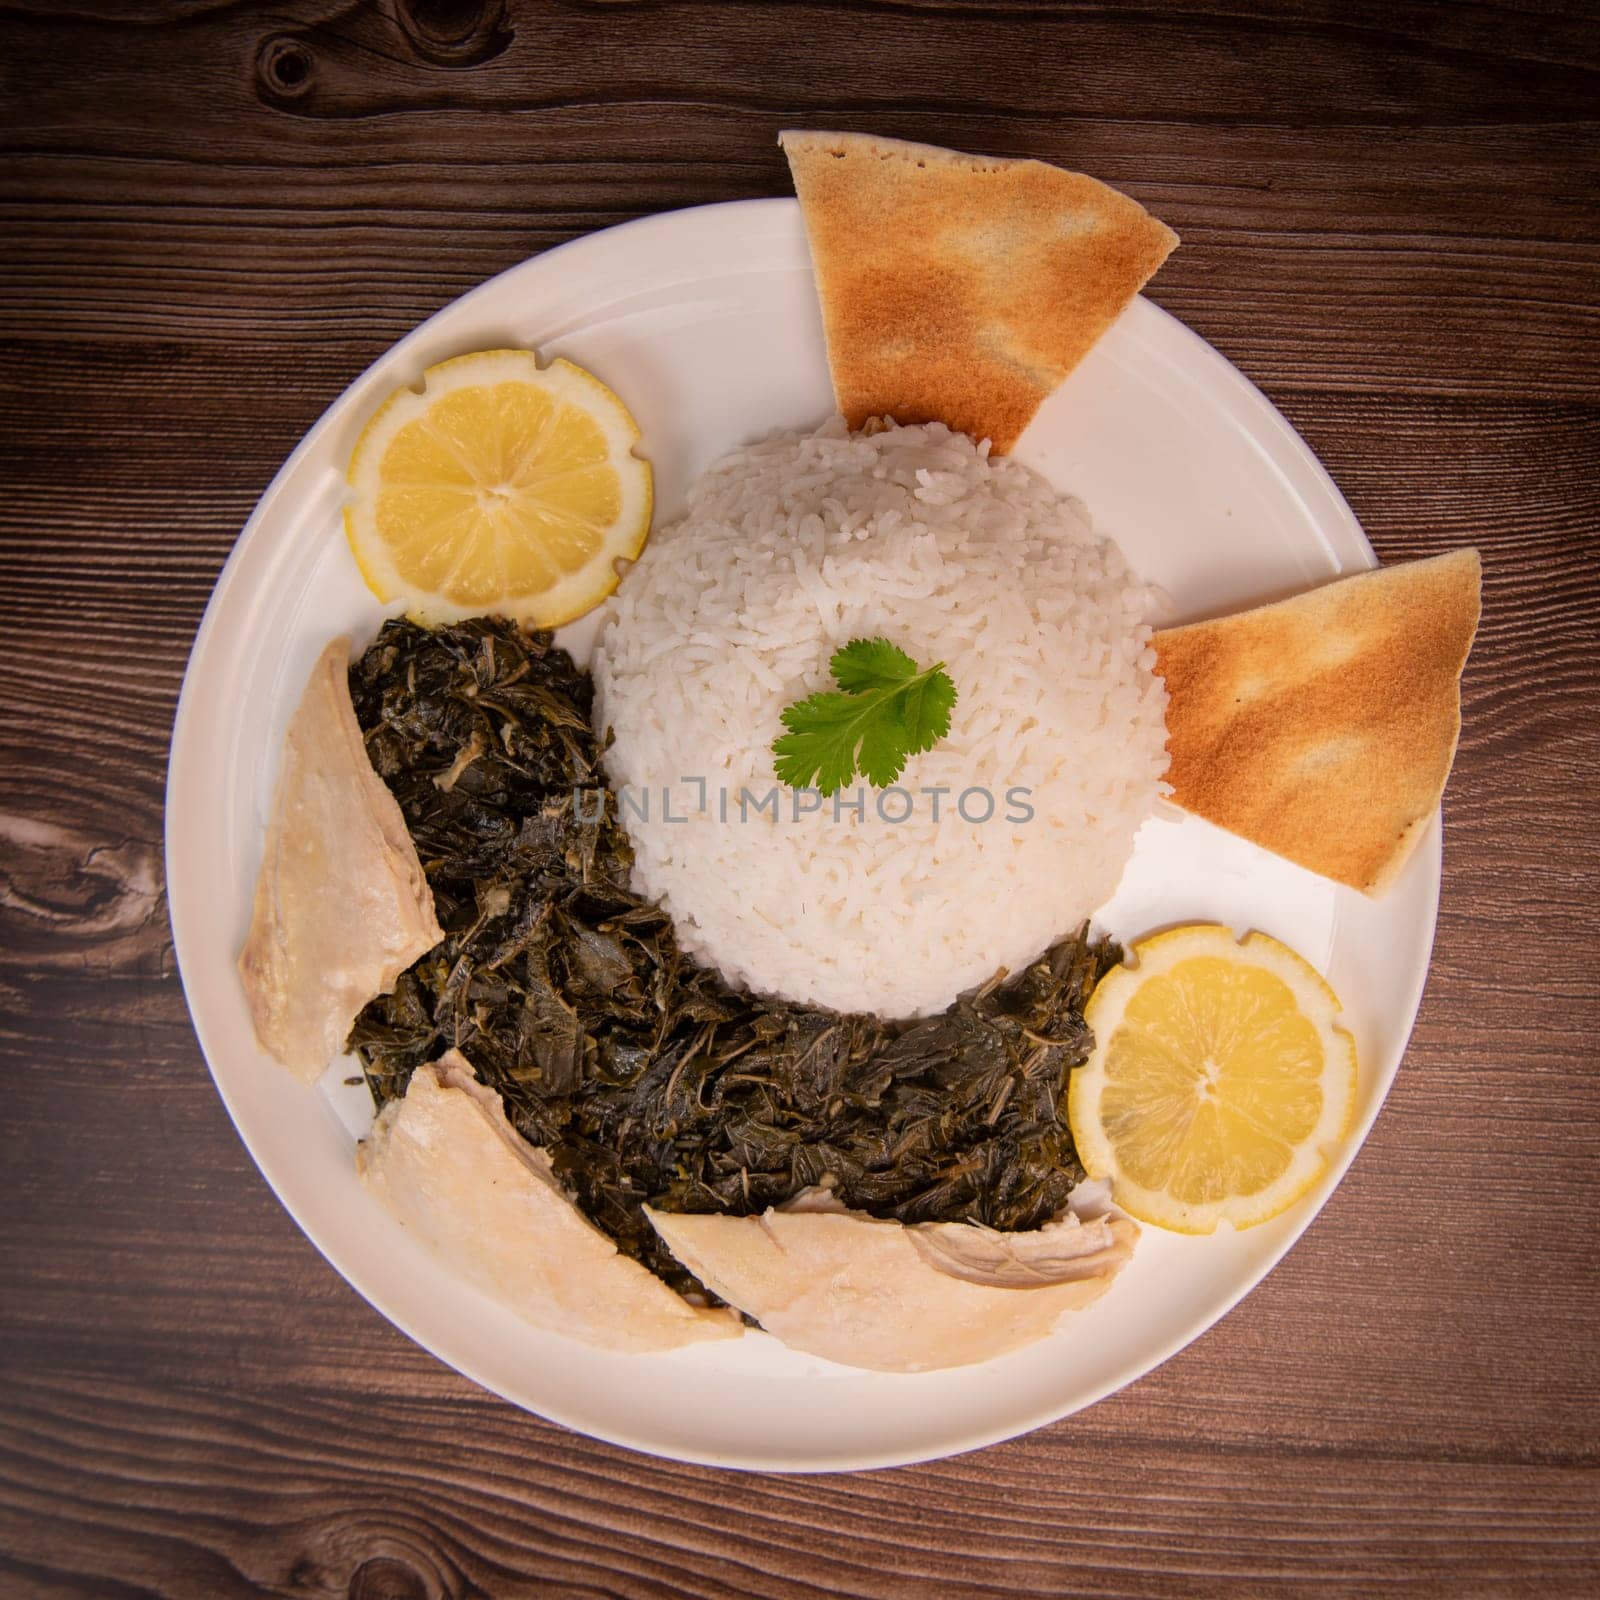 Lebanese recipe Mouloukhia , Melokhiyah, corete leaf and coriander rice chicken, grilled pita. High quality photo